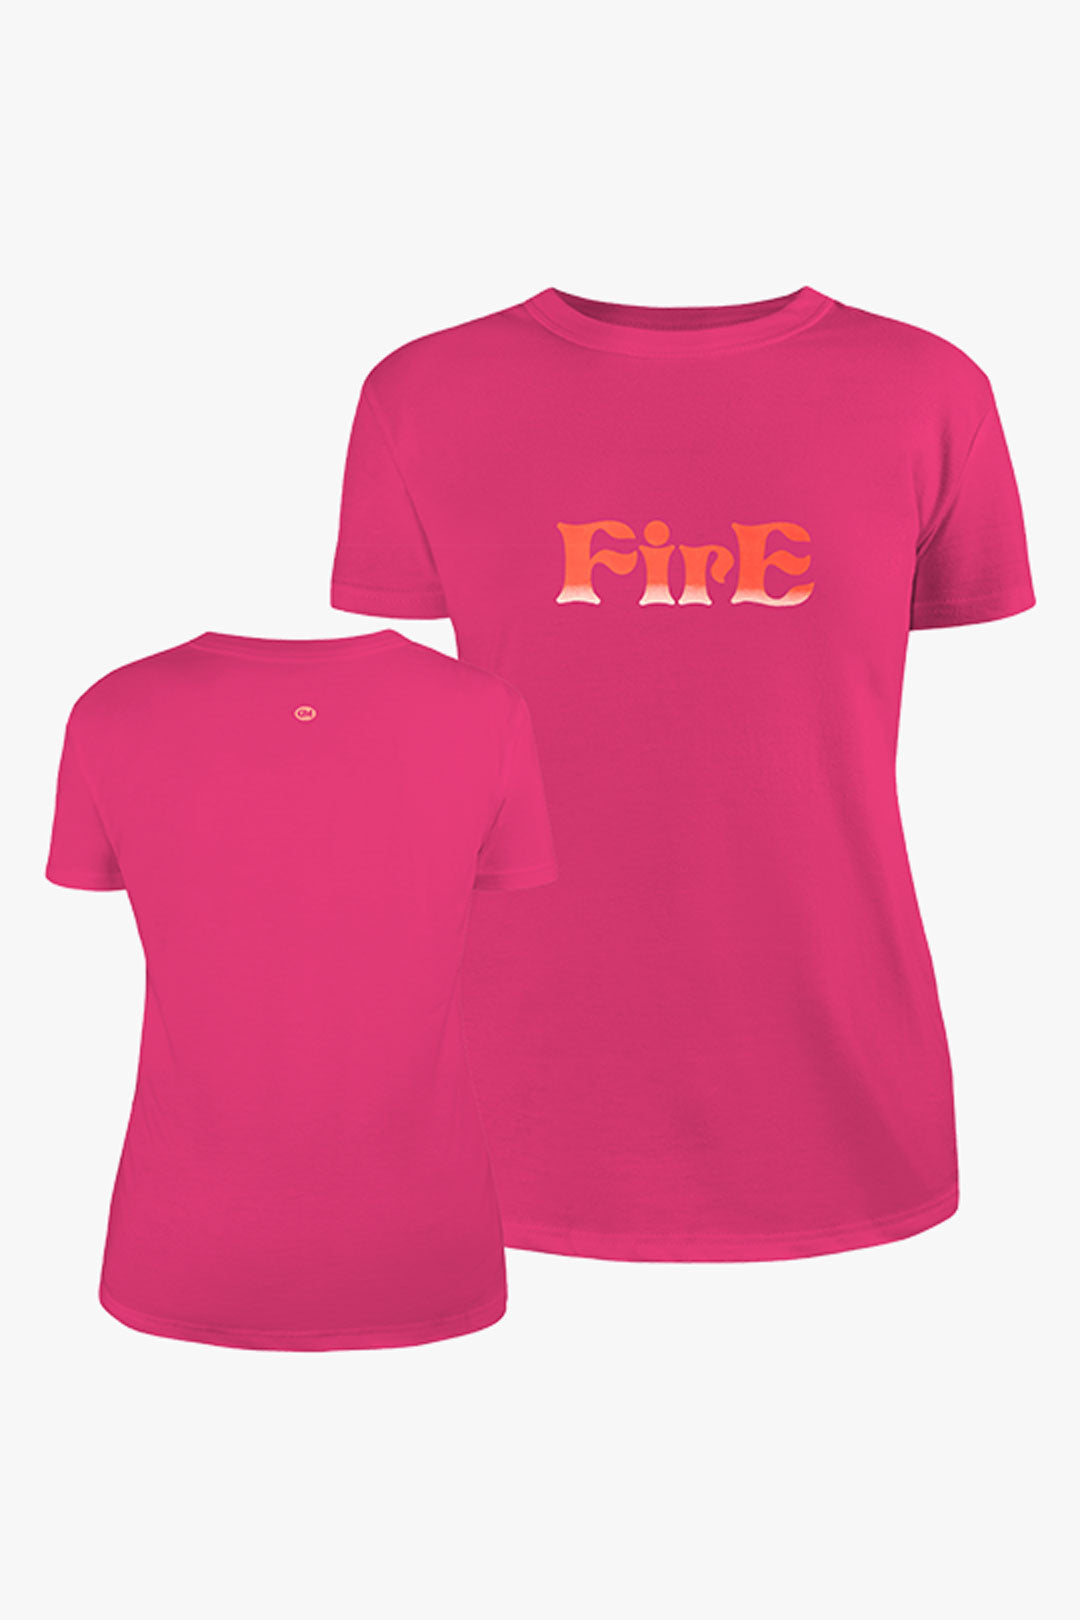 T-shirt Fire 8010 | T-shirt sagomata in cotone biologico